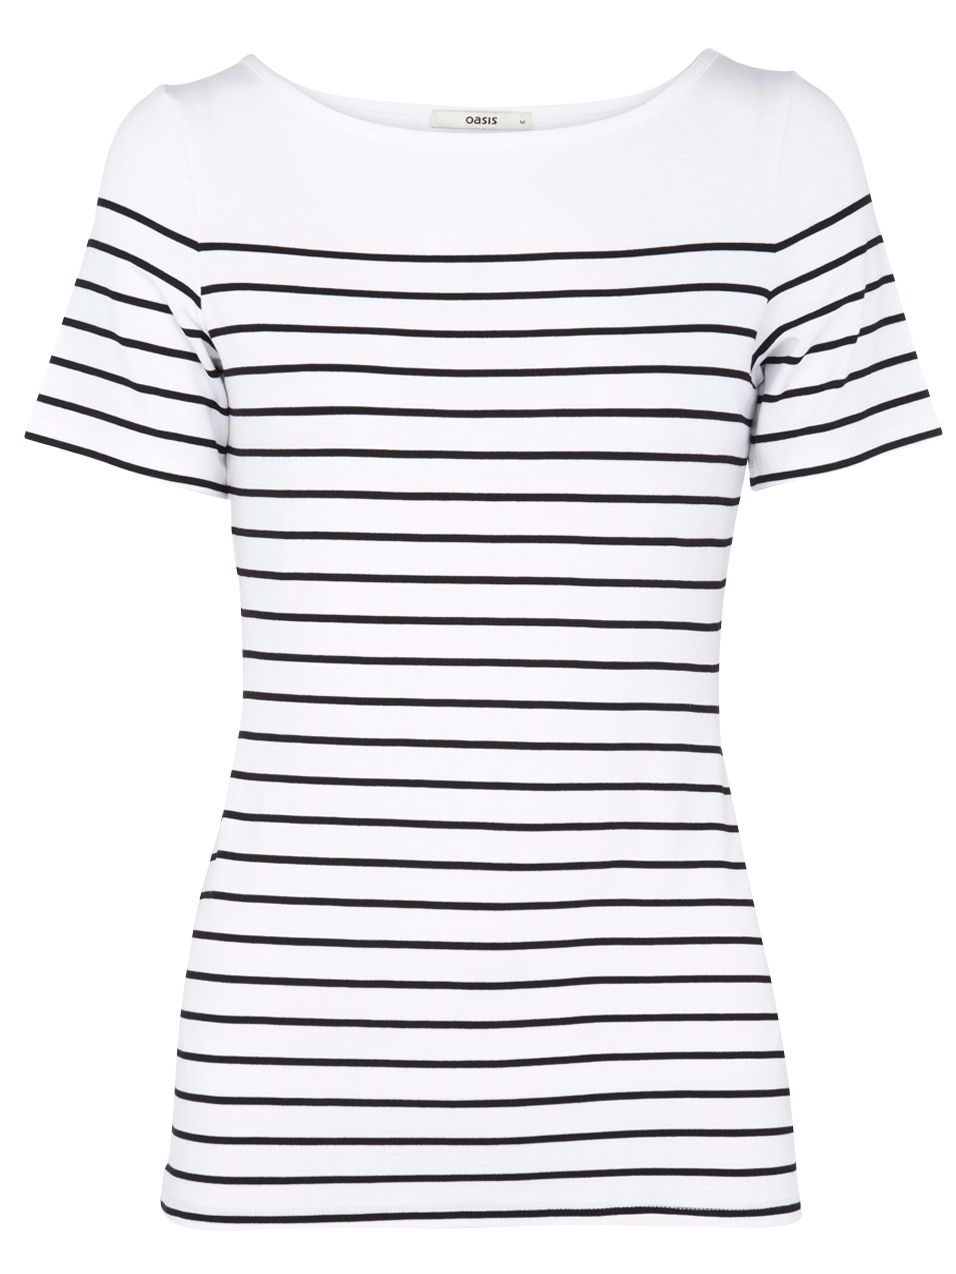 Oasis Breton Stripe Short Sleeve T-Shirt,